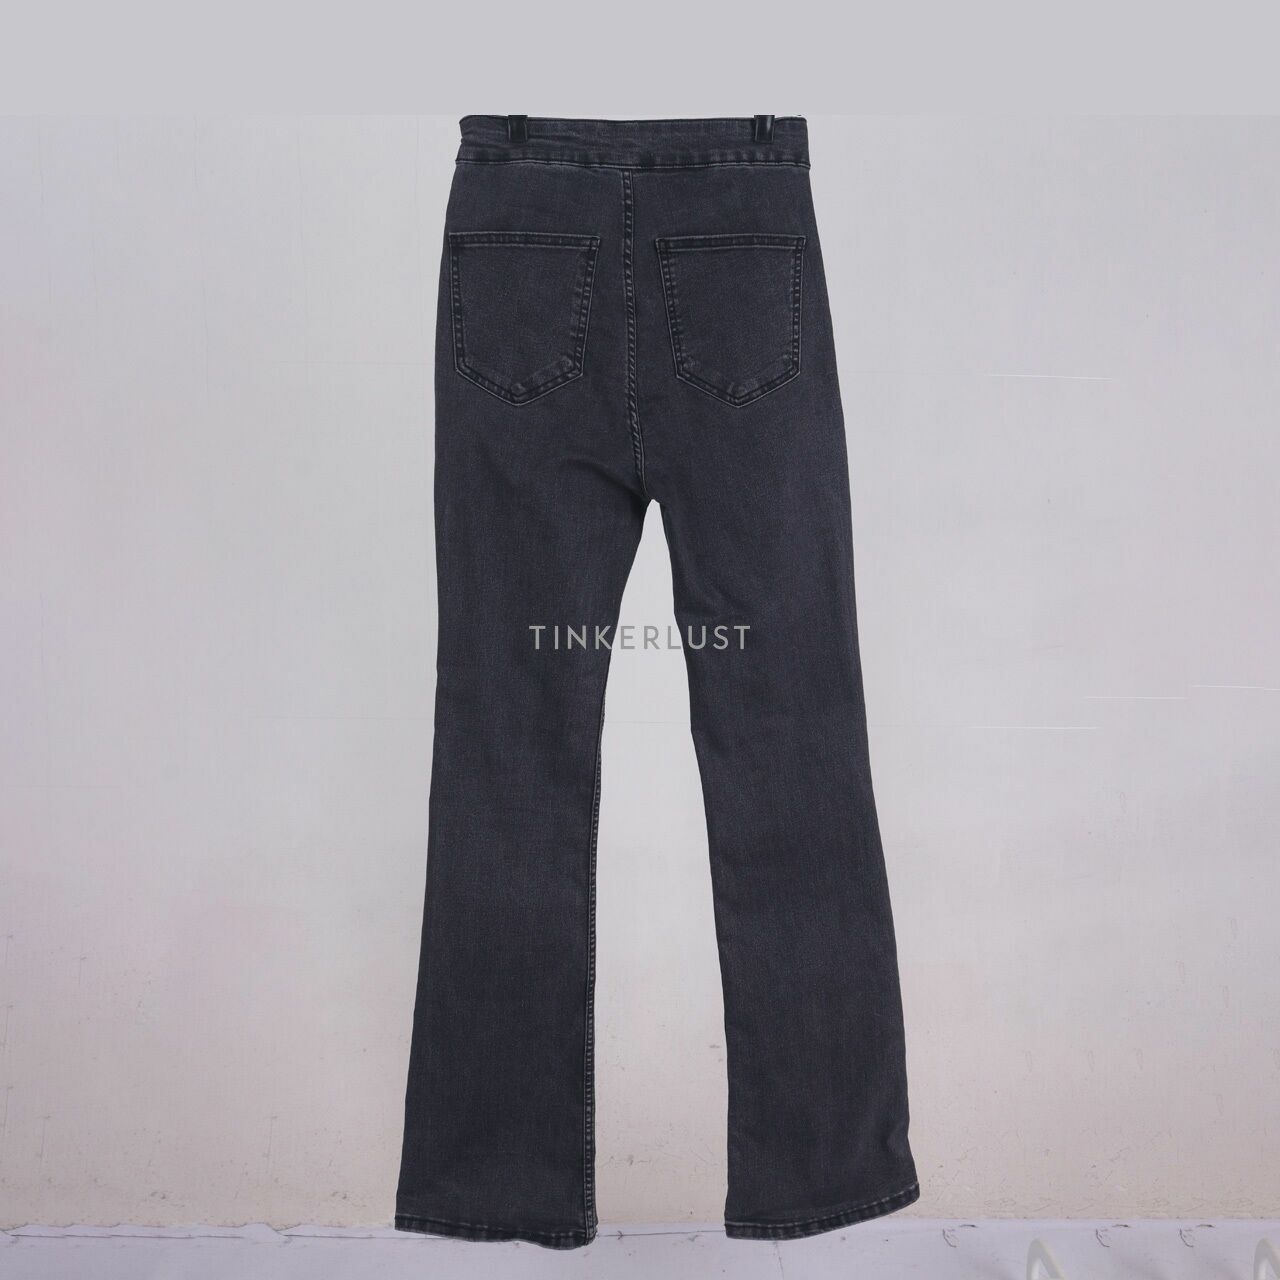 Zara Dark Grey Jeans Long Pants